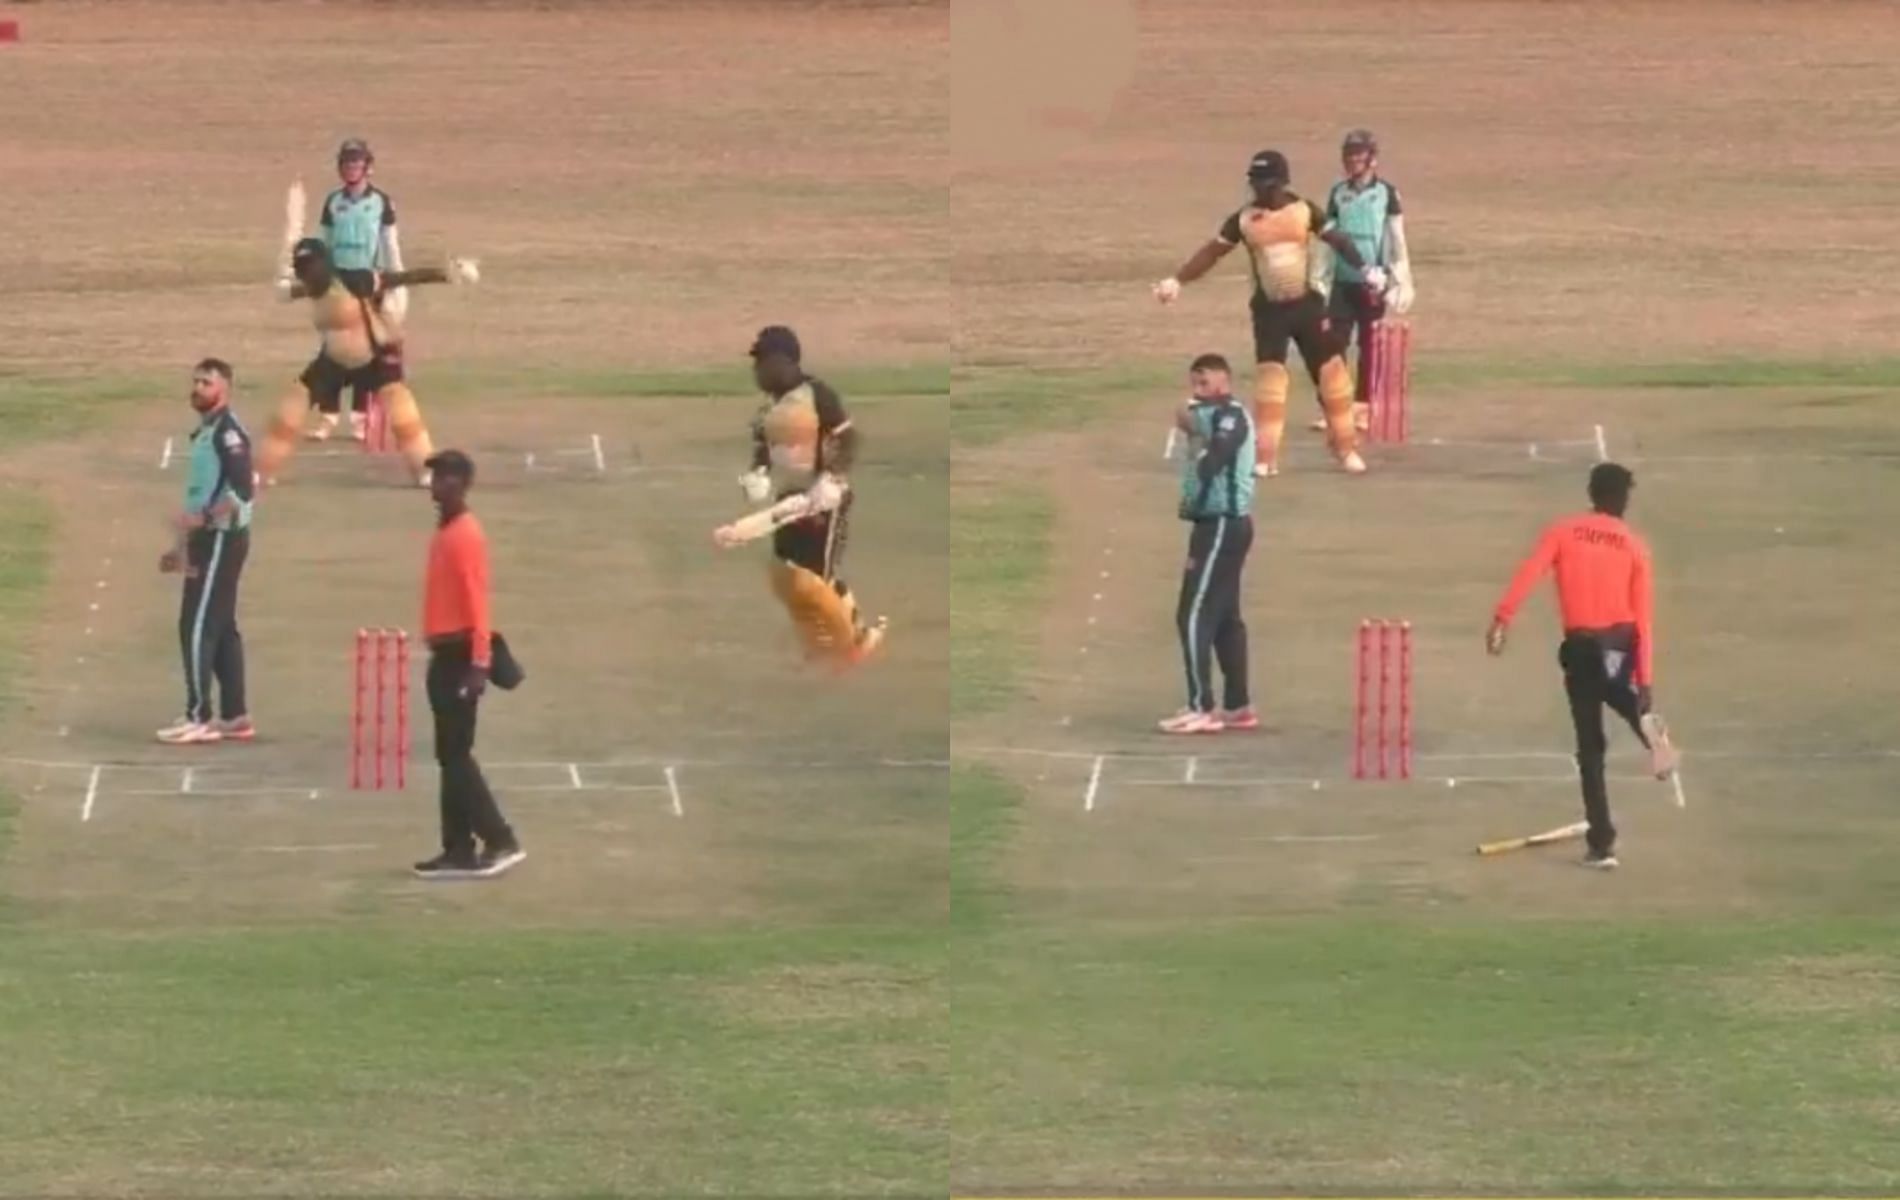 [Watch] Zimbabwe cricketer's flamboyant bat-throwing celebration goes wrong as flying willow hits umpire's leg